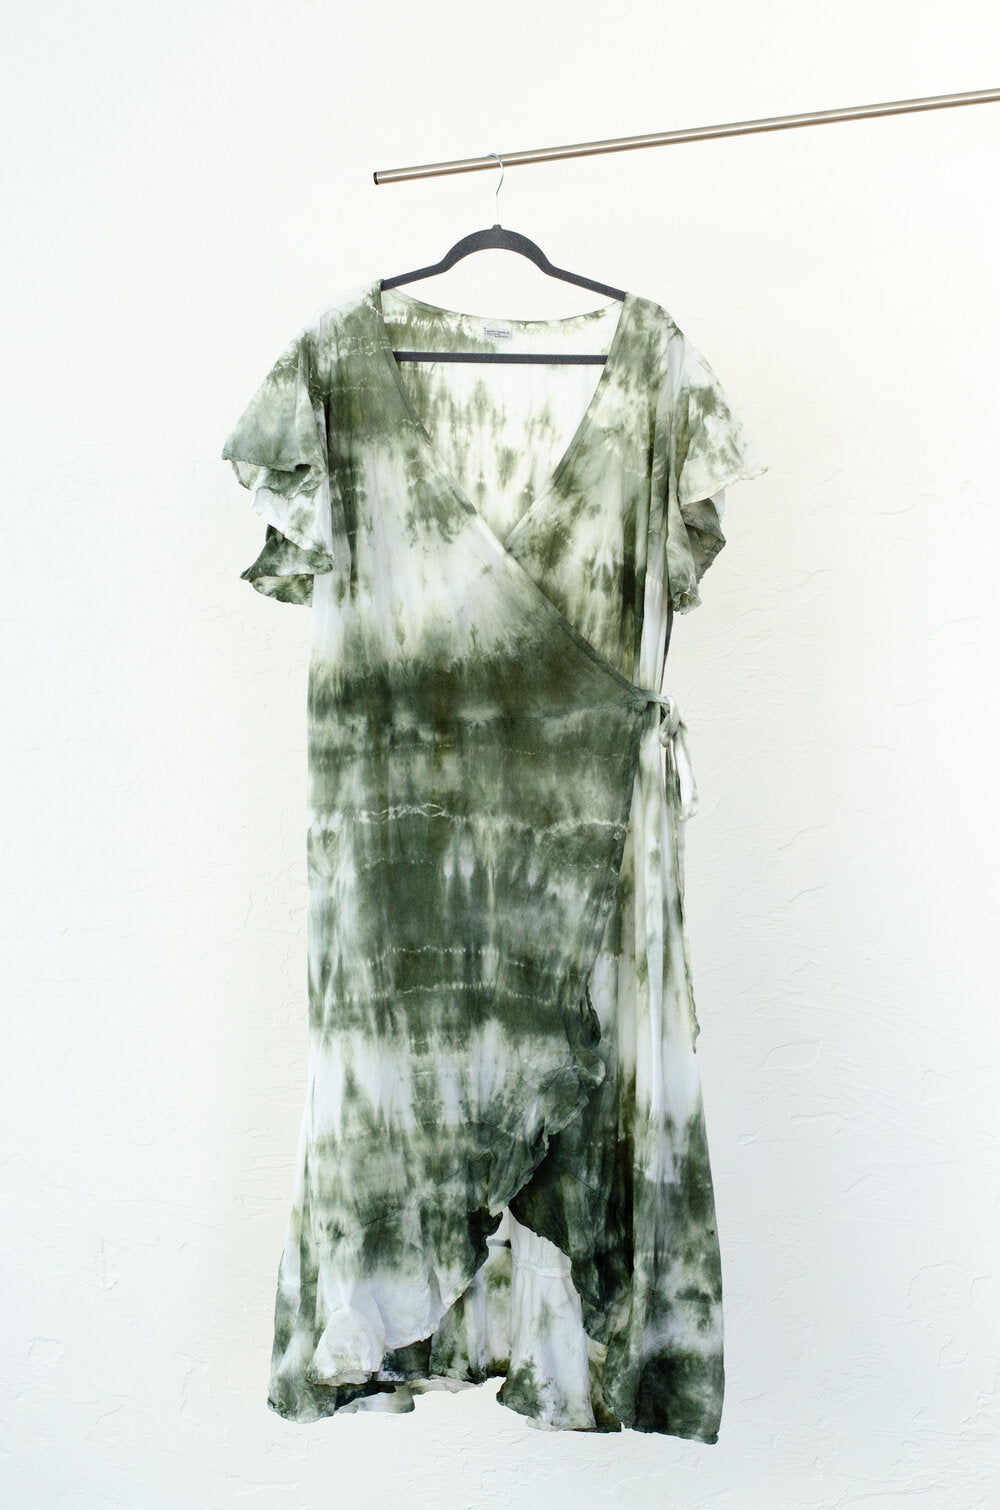 The Celebration Wrap Dress by 1 Life - Olive + Sage Colors